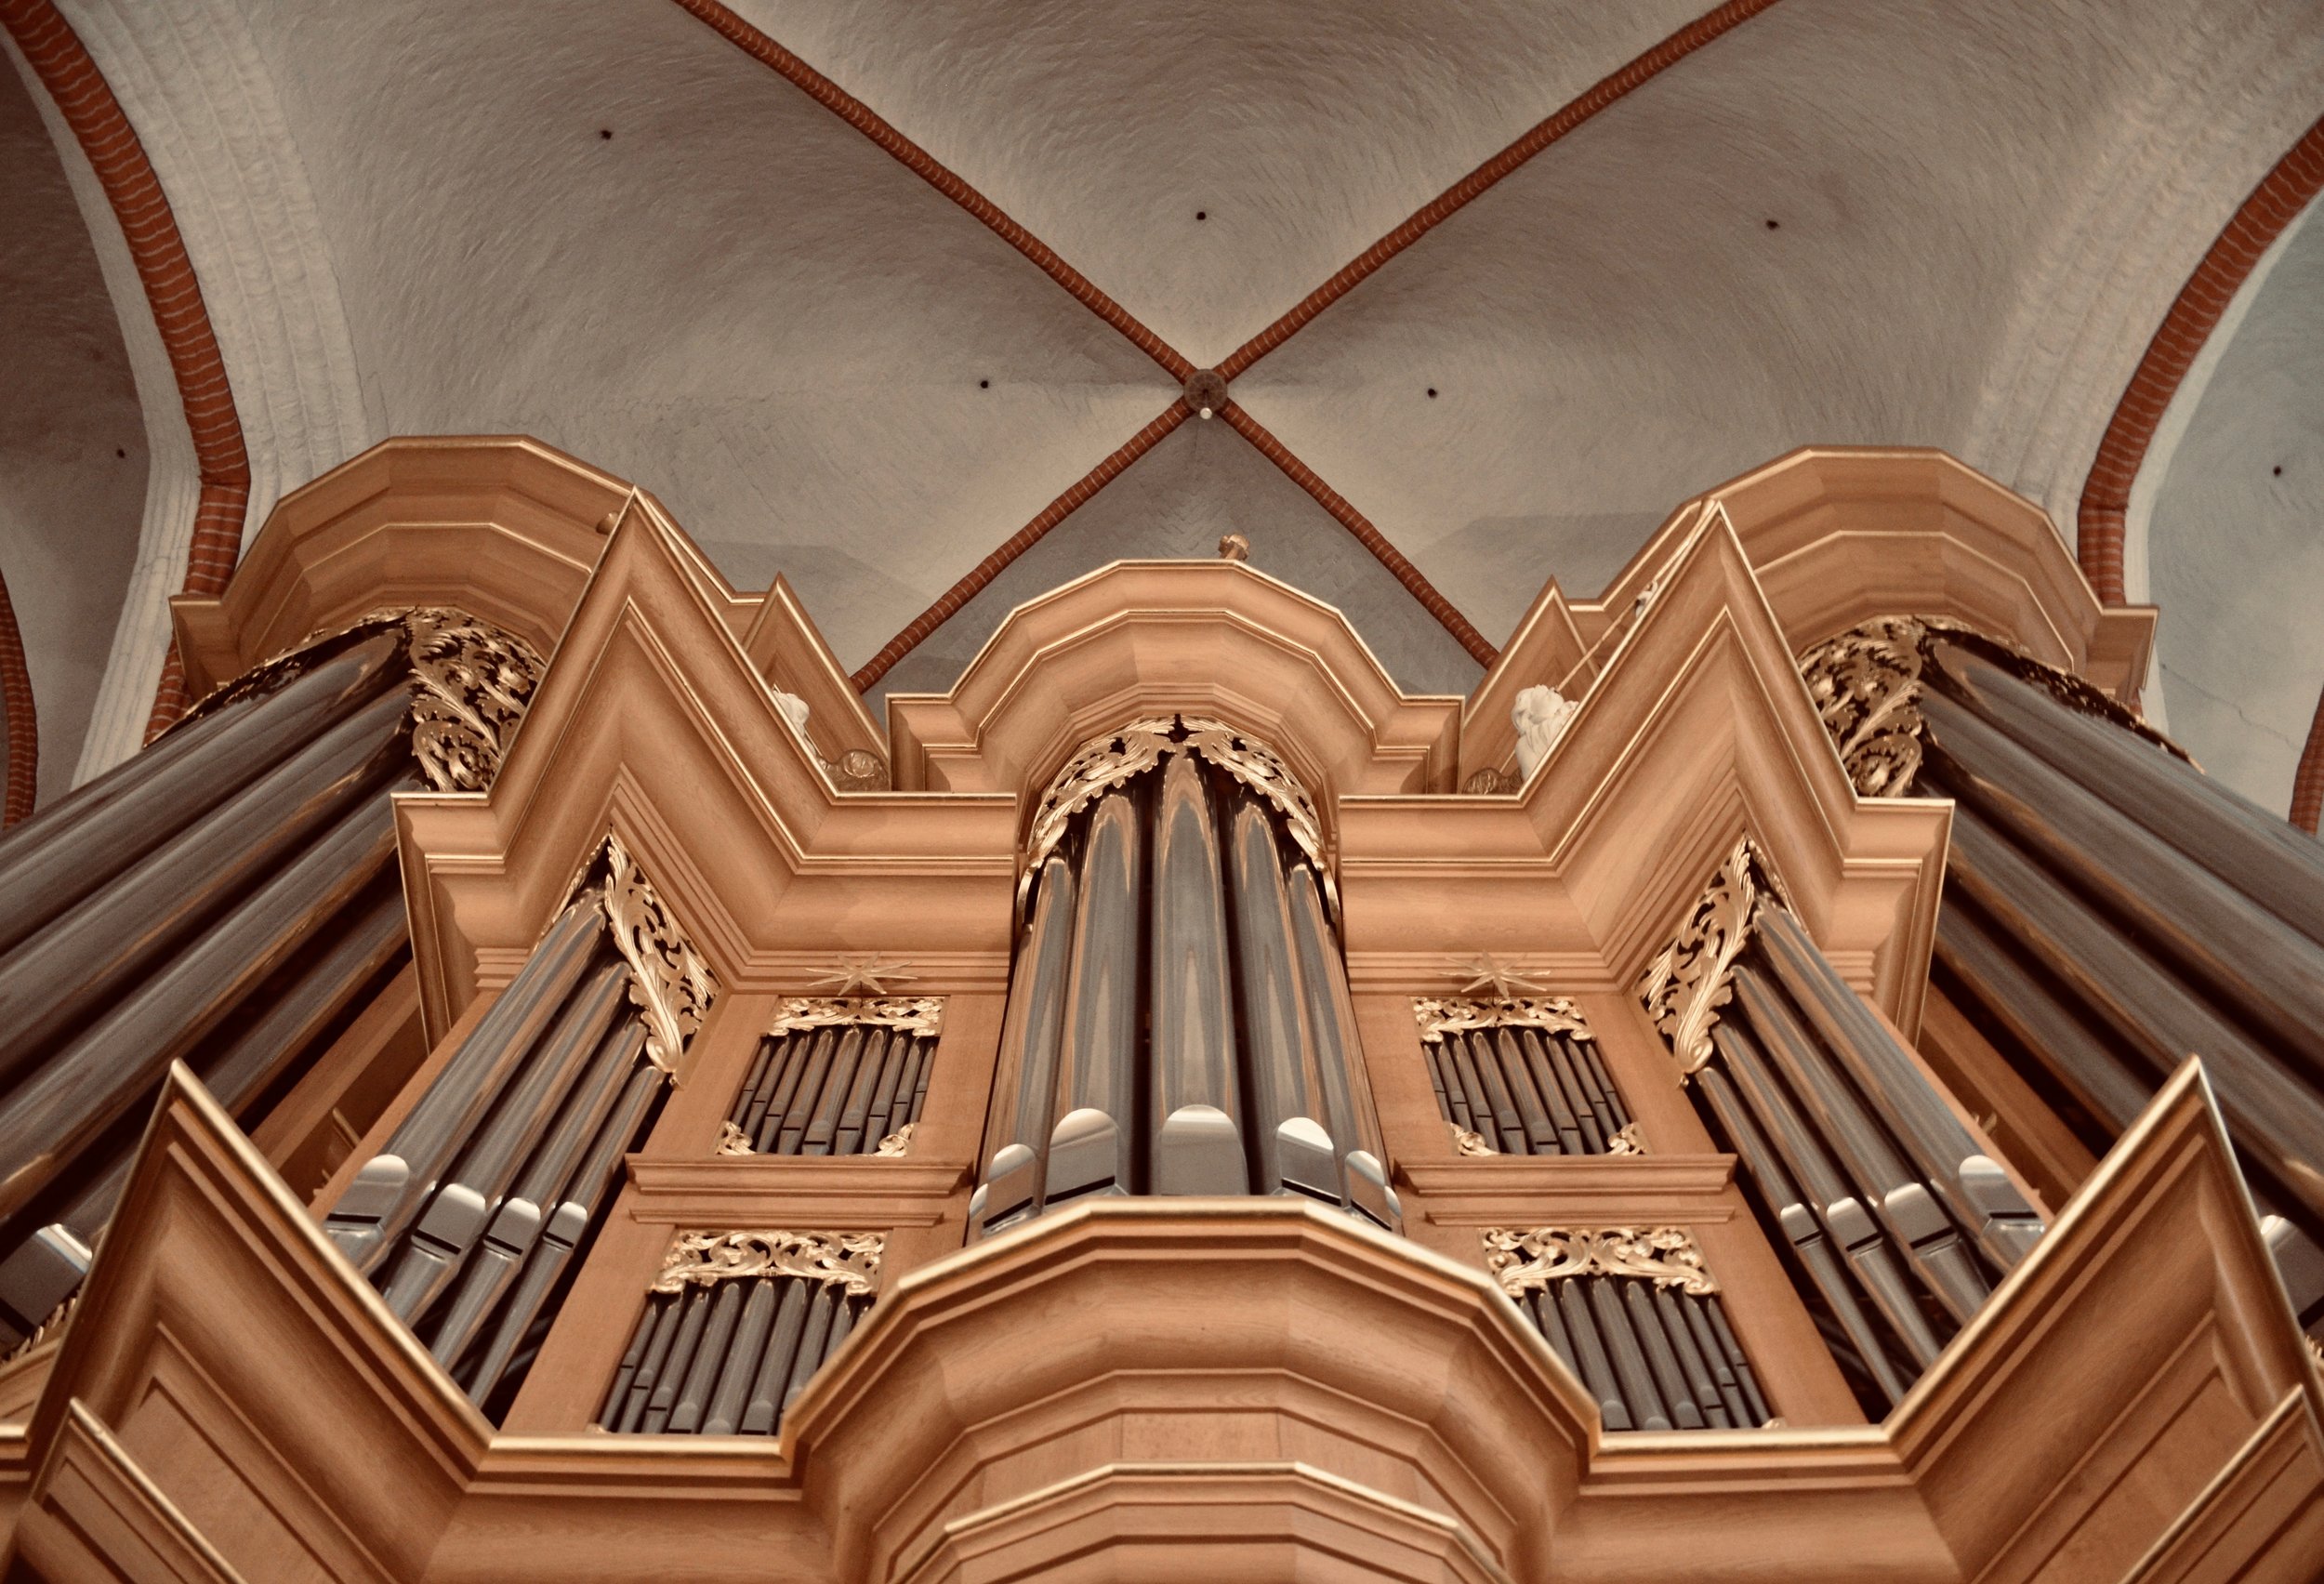  1693 Schnitger organ, St. Jacobi, Hamburg. 